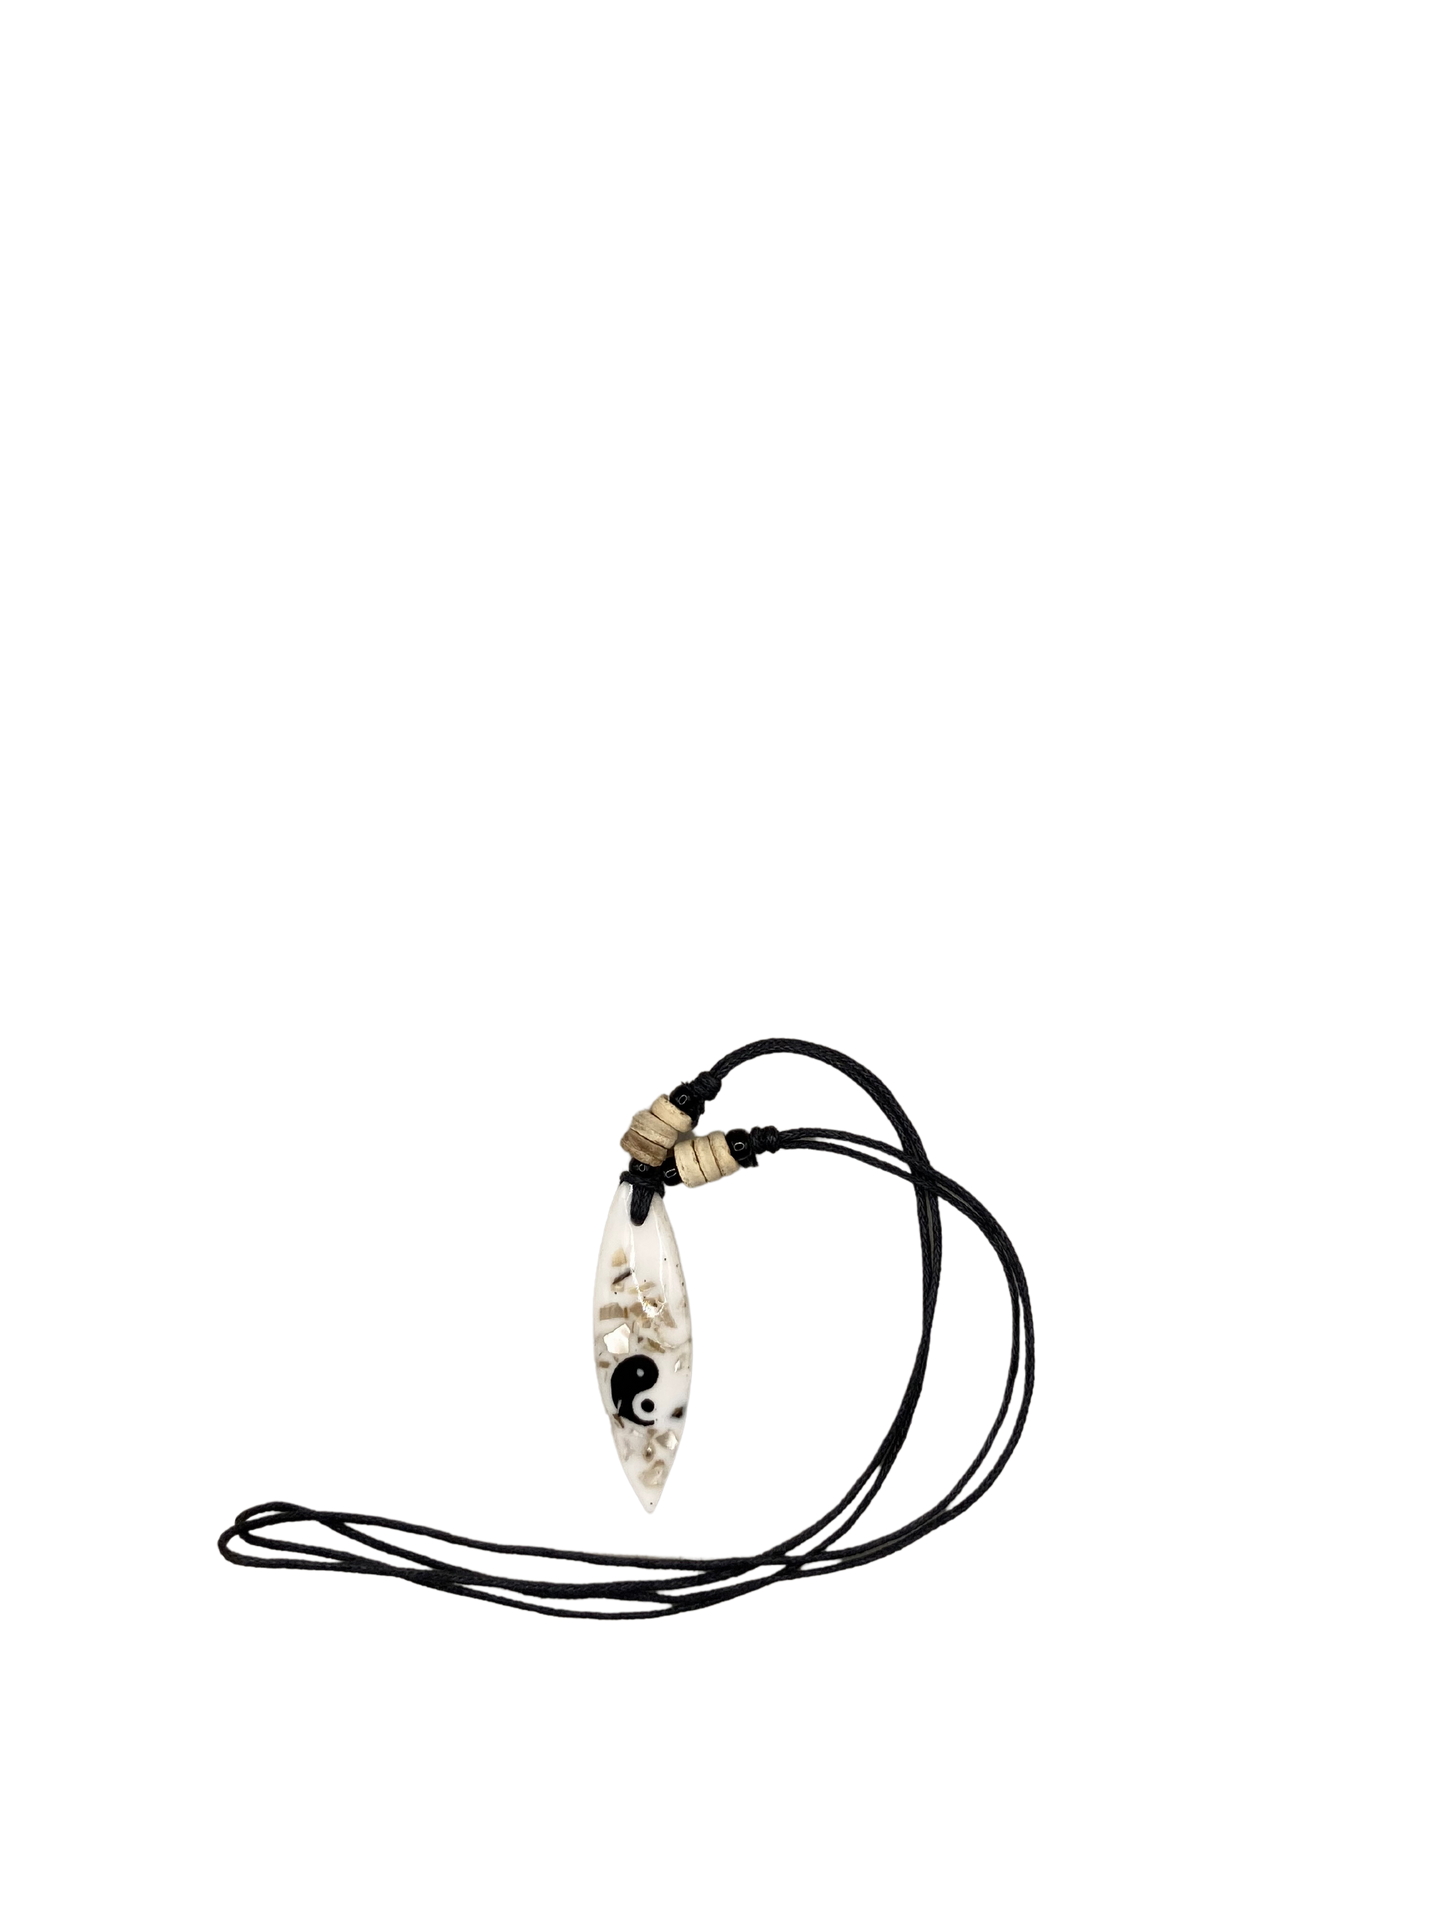 Yin Yang Necklace (White)